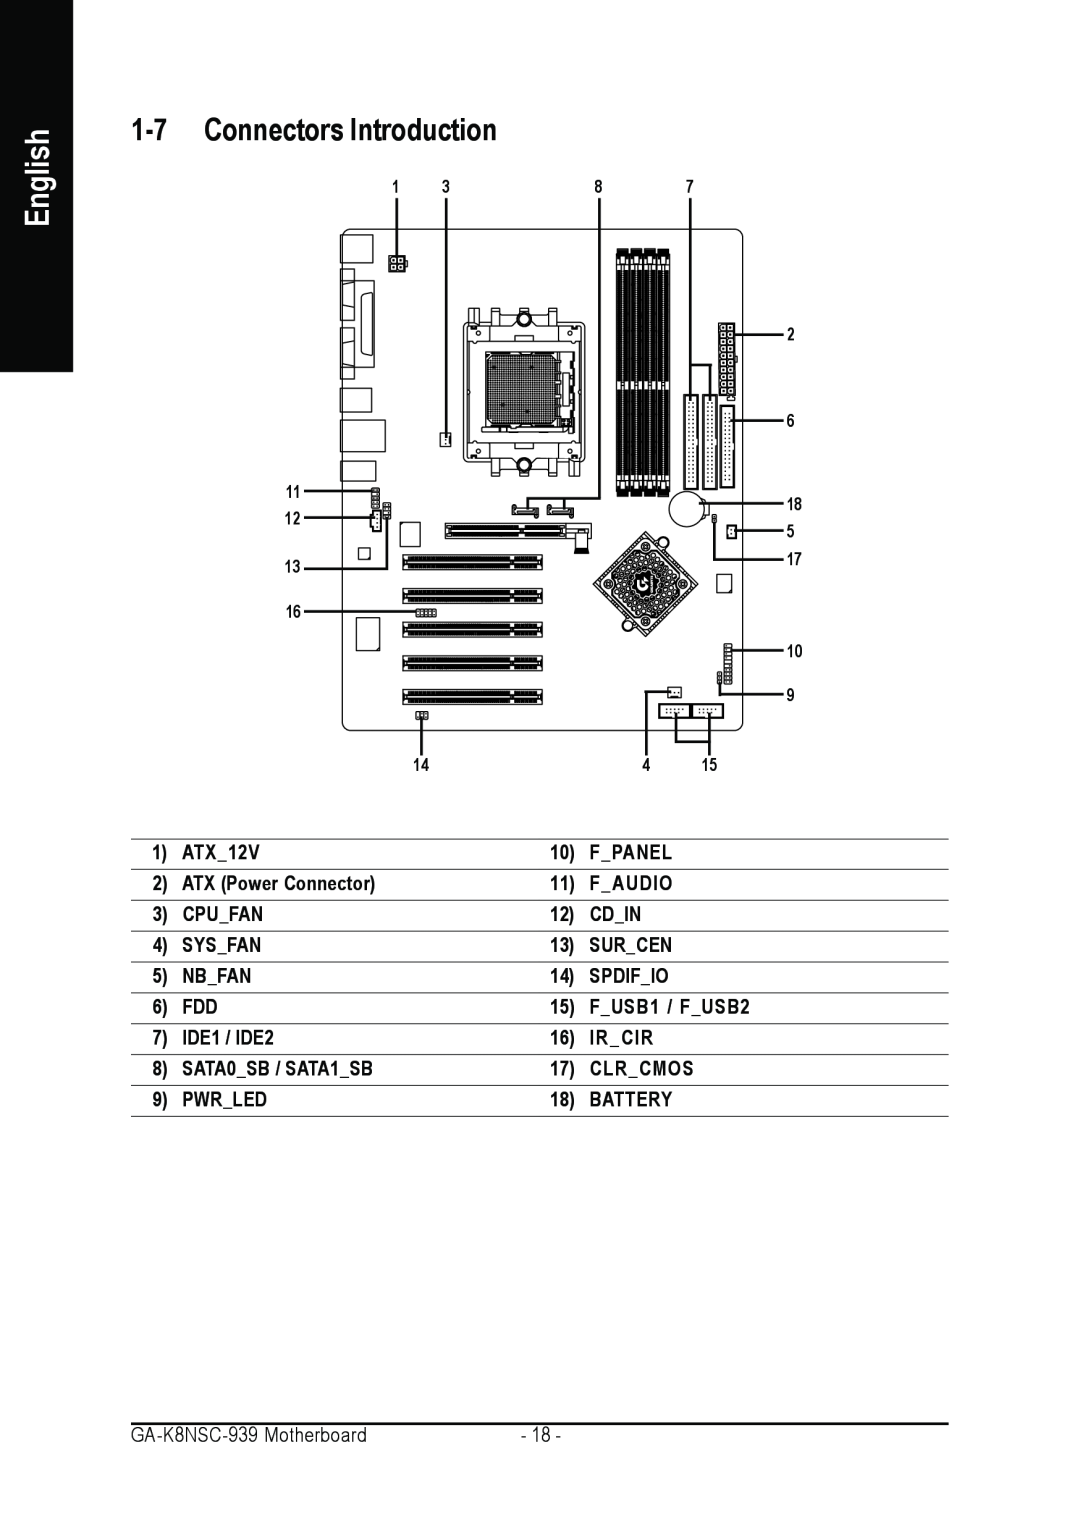 AMD GA-K8NSC-939 user manual Connectors Introduction, English 